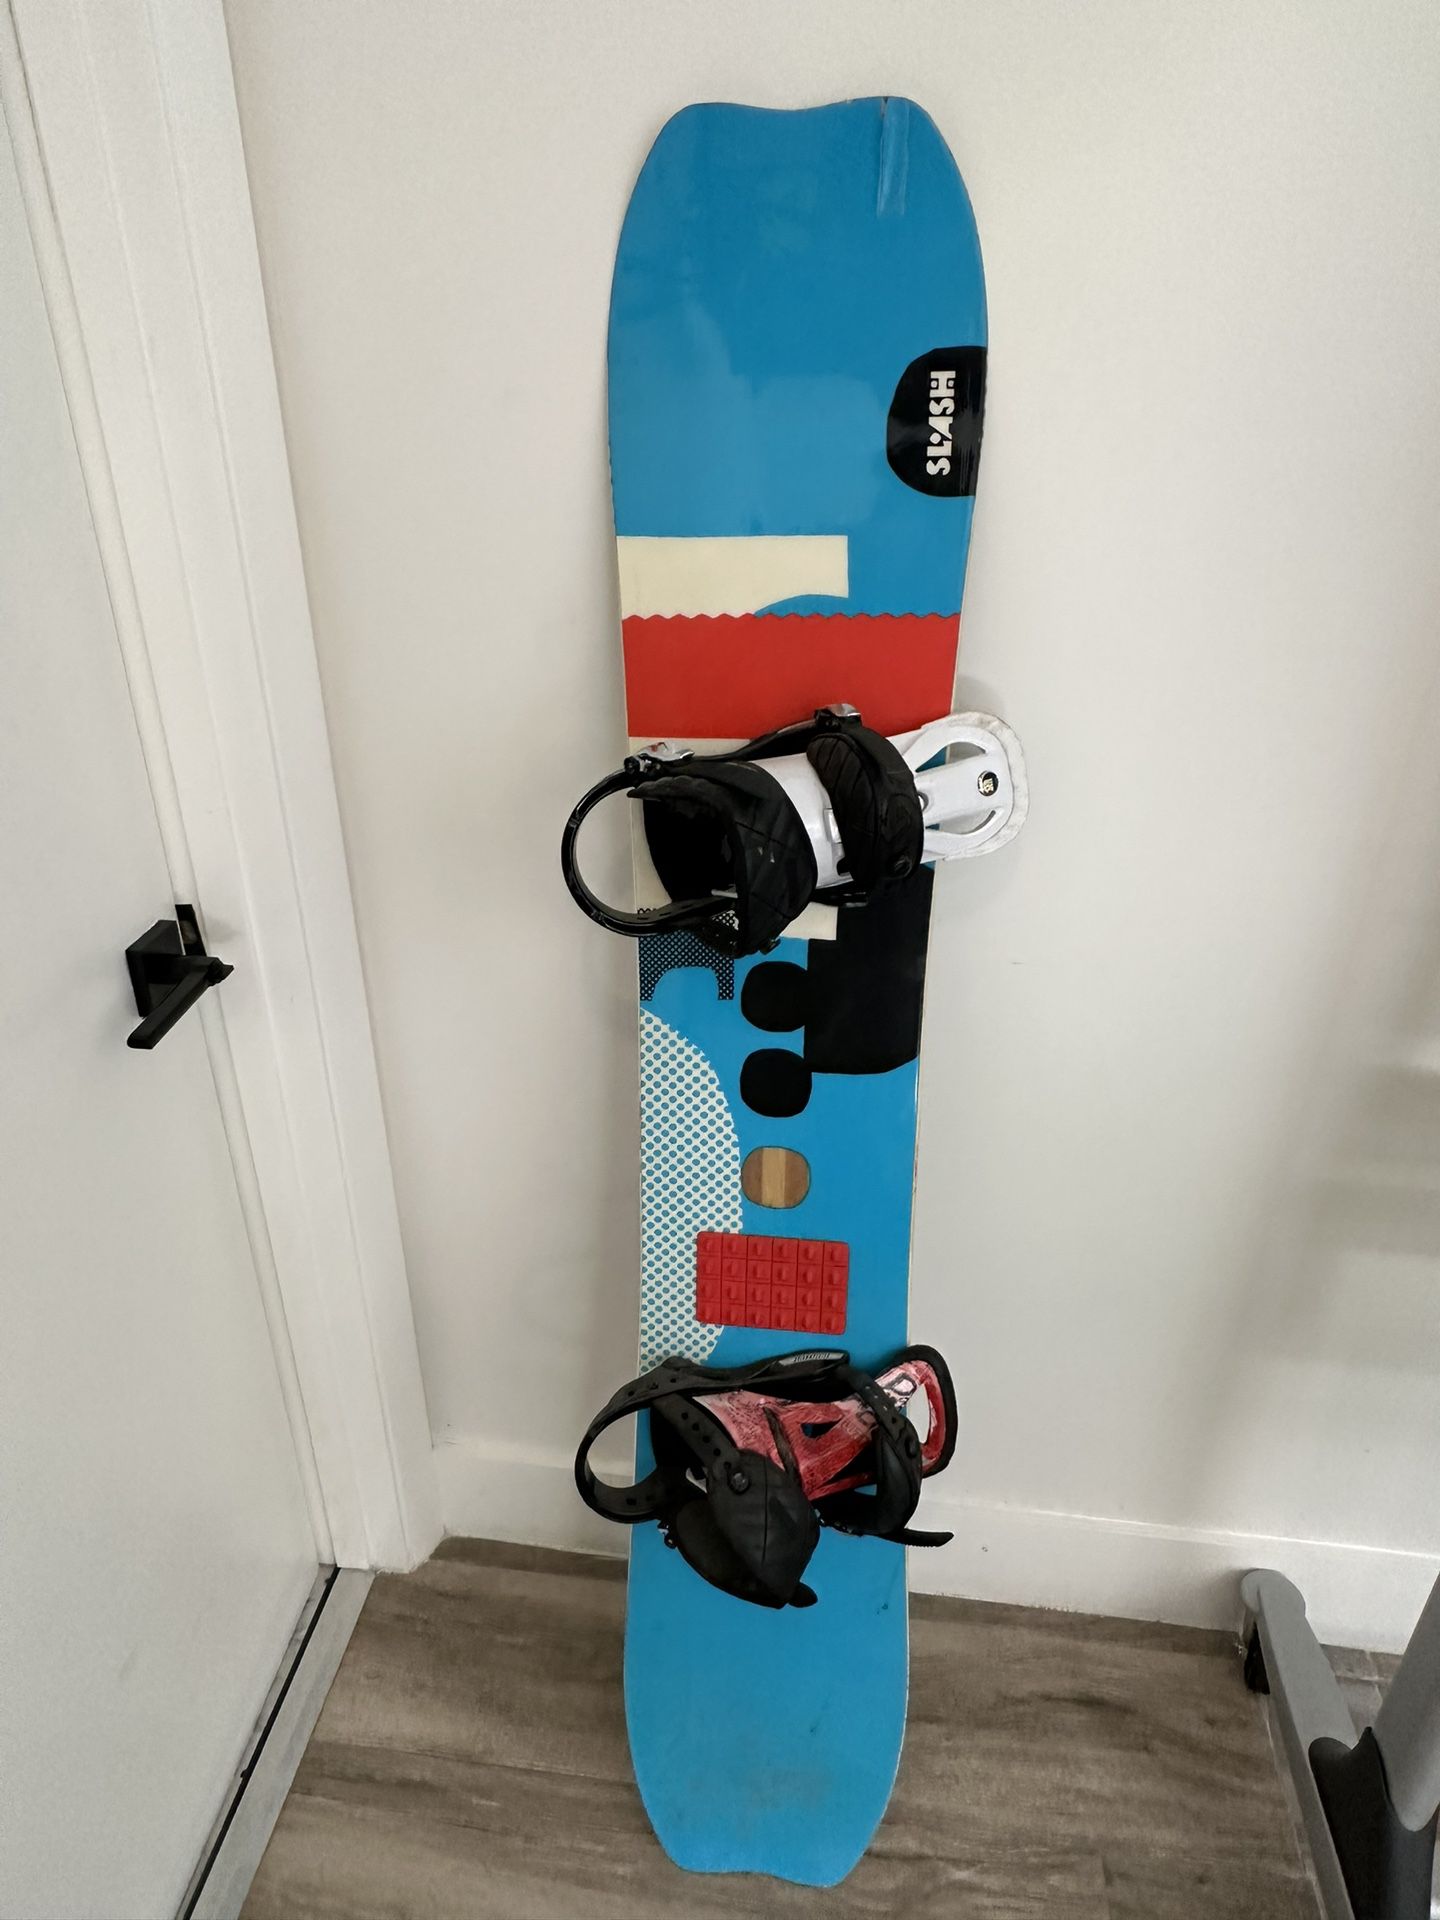 Snowboard Combo - Board, Bindings, Bag, & boots if wanted